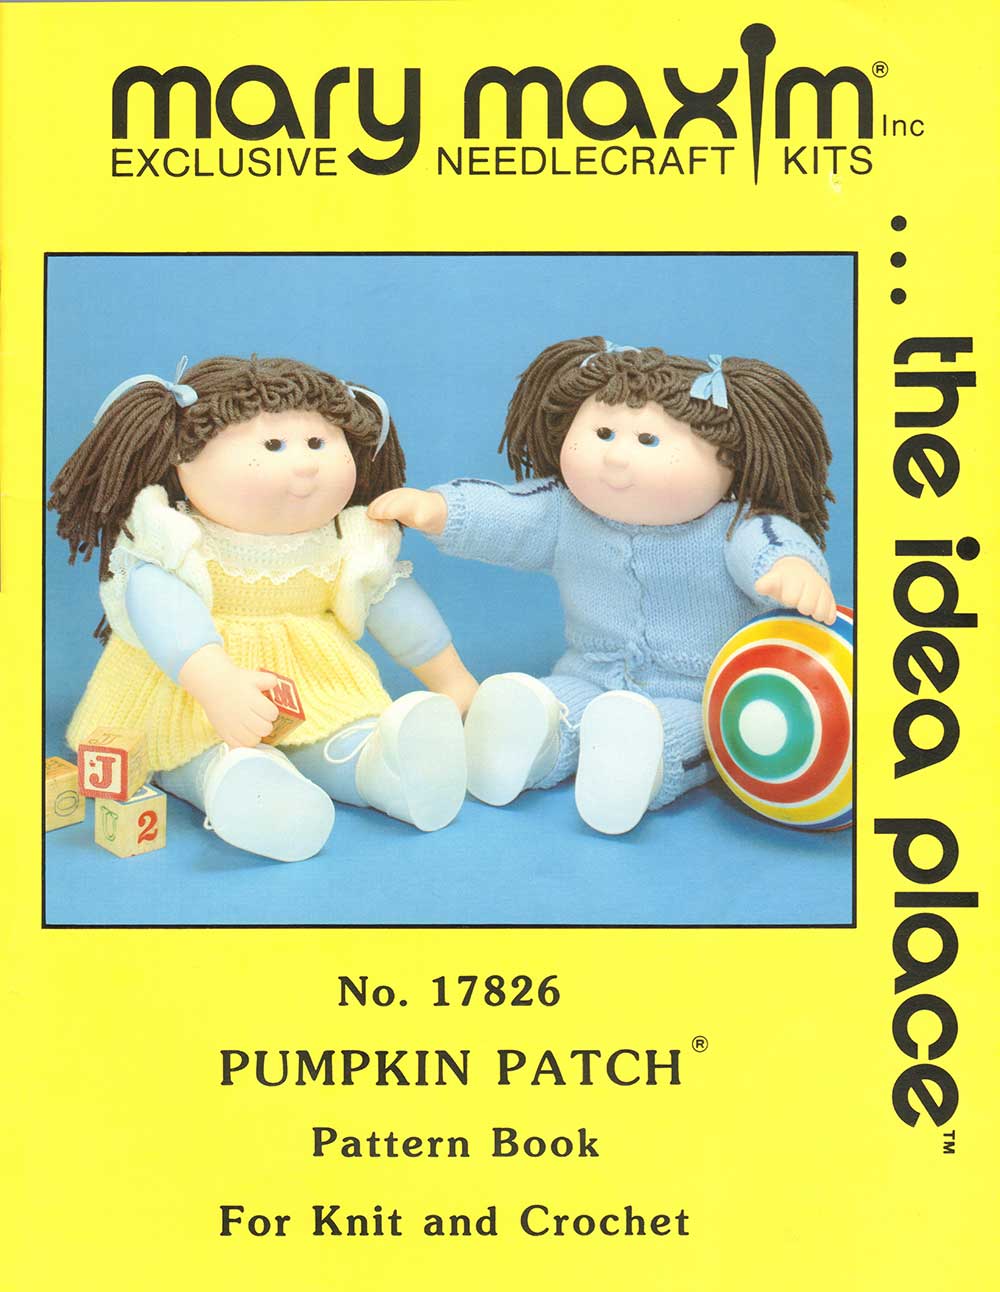 Pumpkin Patch Pattern Booklet